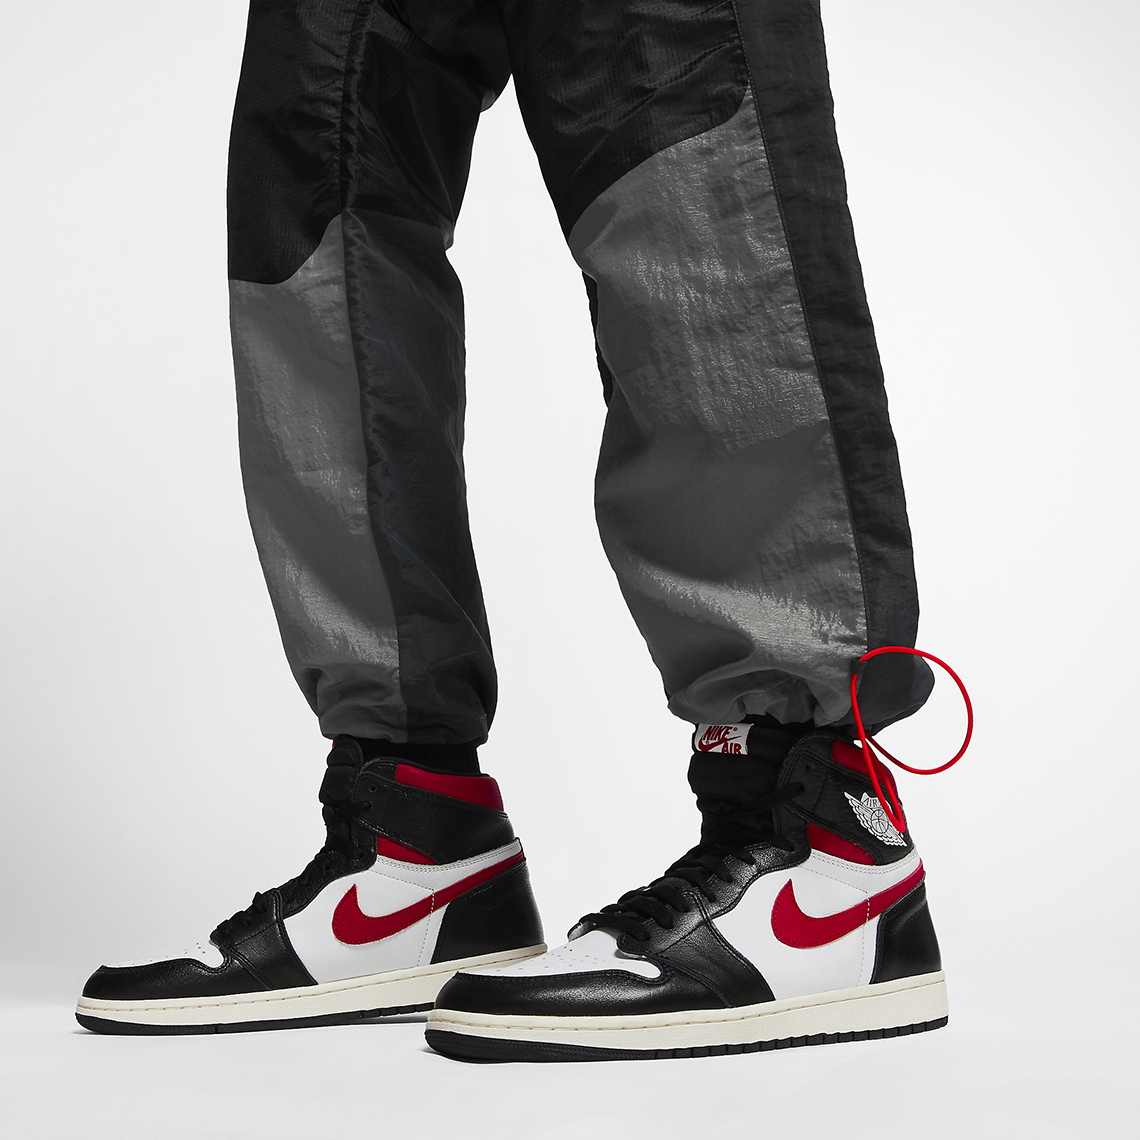 Off White Jordan Clothing - Release Info | SneakerNews.com